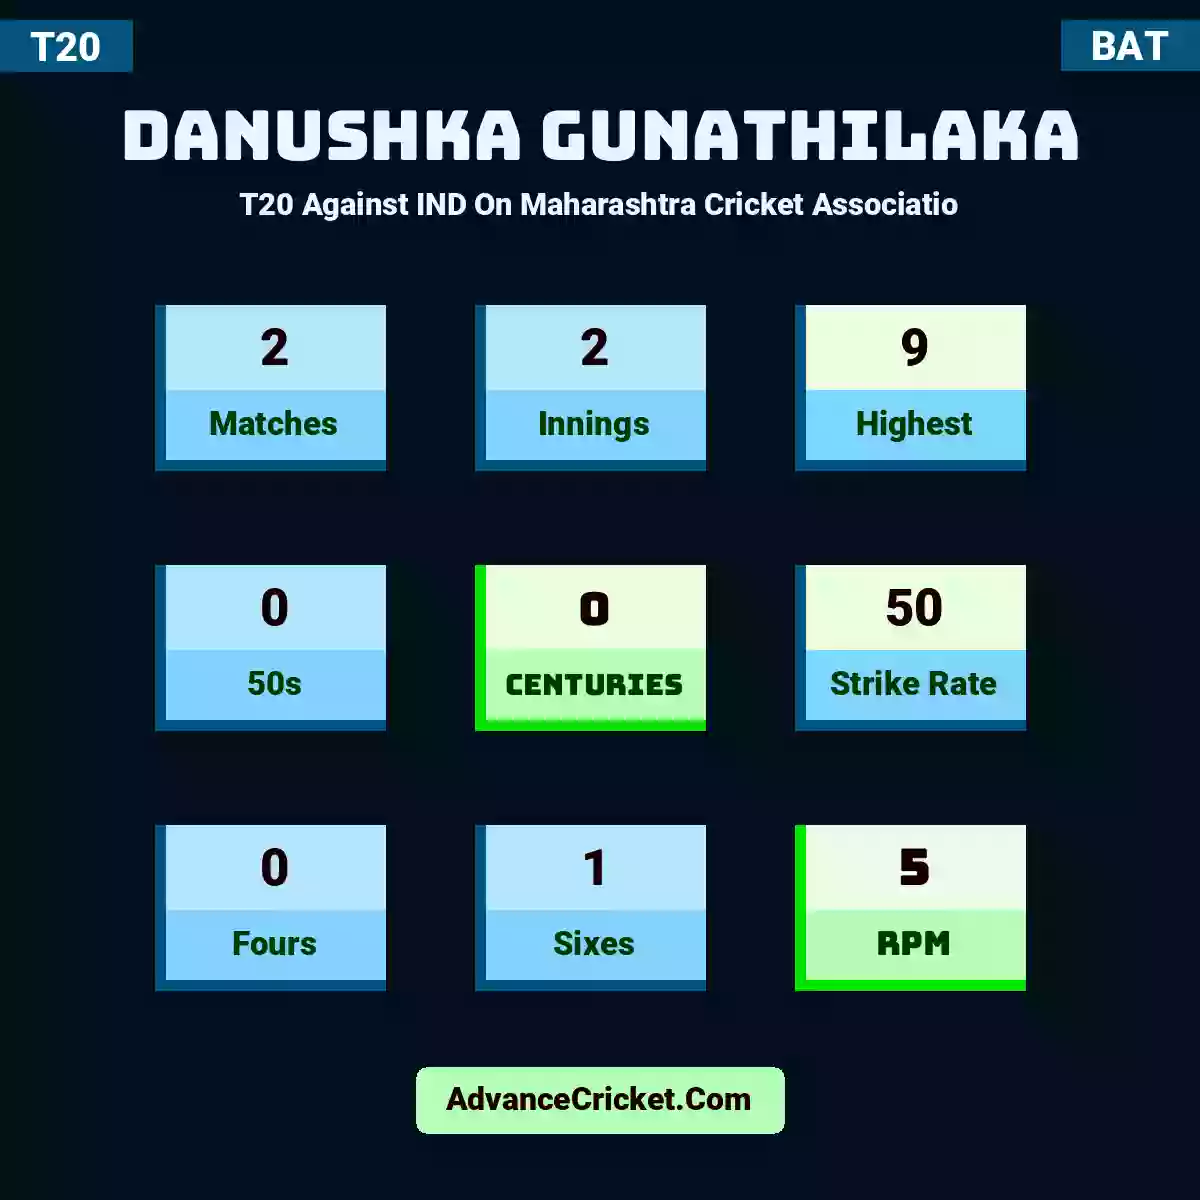 Danushka Gunathilaka T20  Against IND On Maharashtra Cricket Associatio, Danushka Gunathilaka played 2 matches, scored 9 runs as highest, 0 half-centuries, and 0 centuries, with a strike rate of 50. D.Gunathilaka hit 0 fours and 1 sixes, with an RPM of 5.